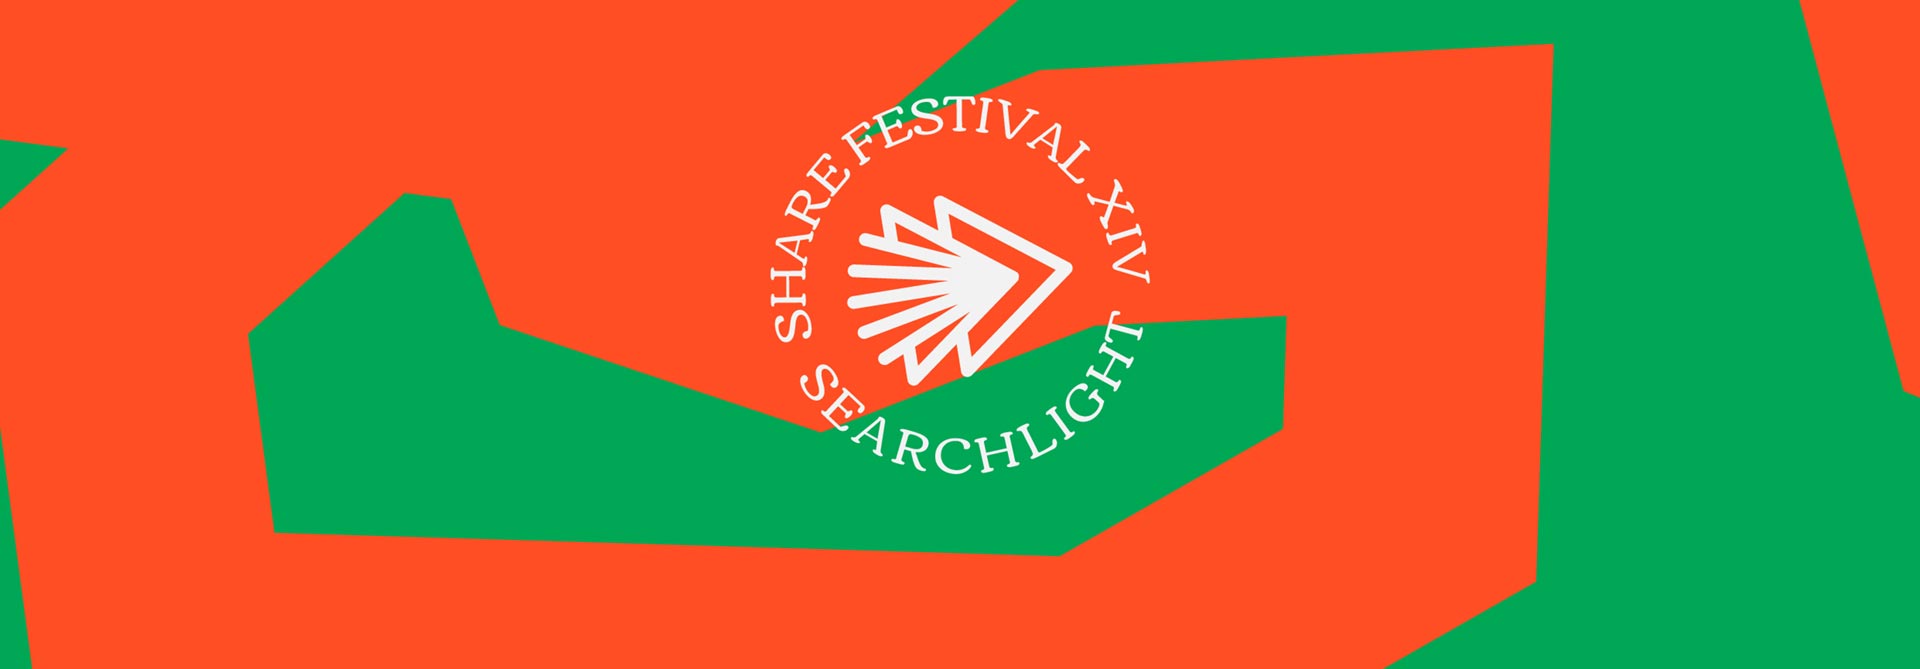 Share Festival XVI SEARCHLIGHT